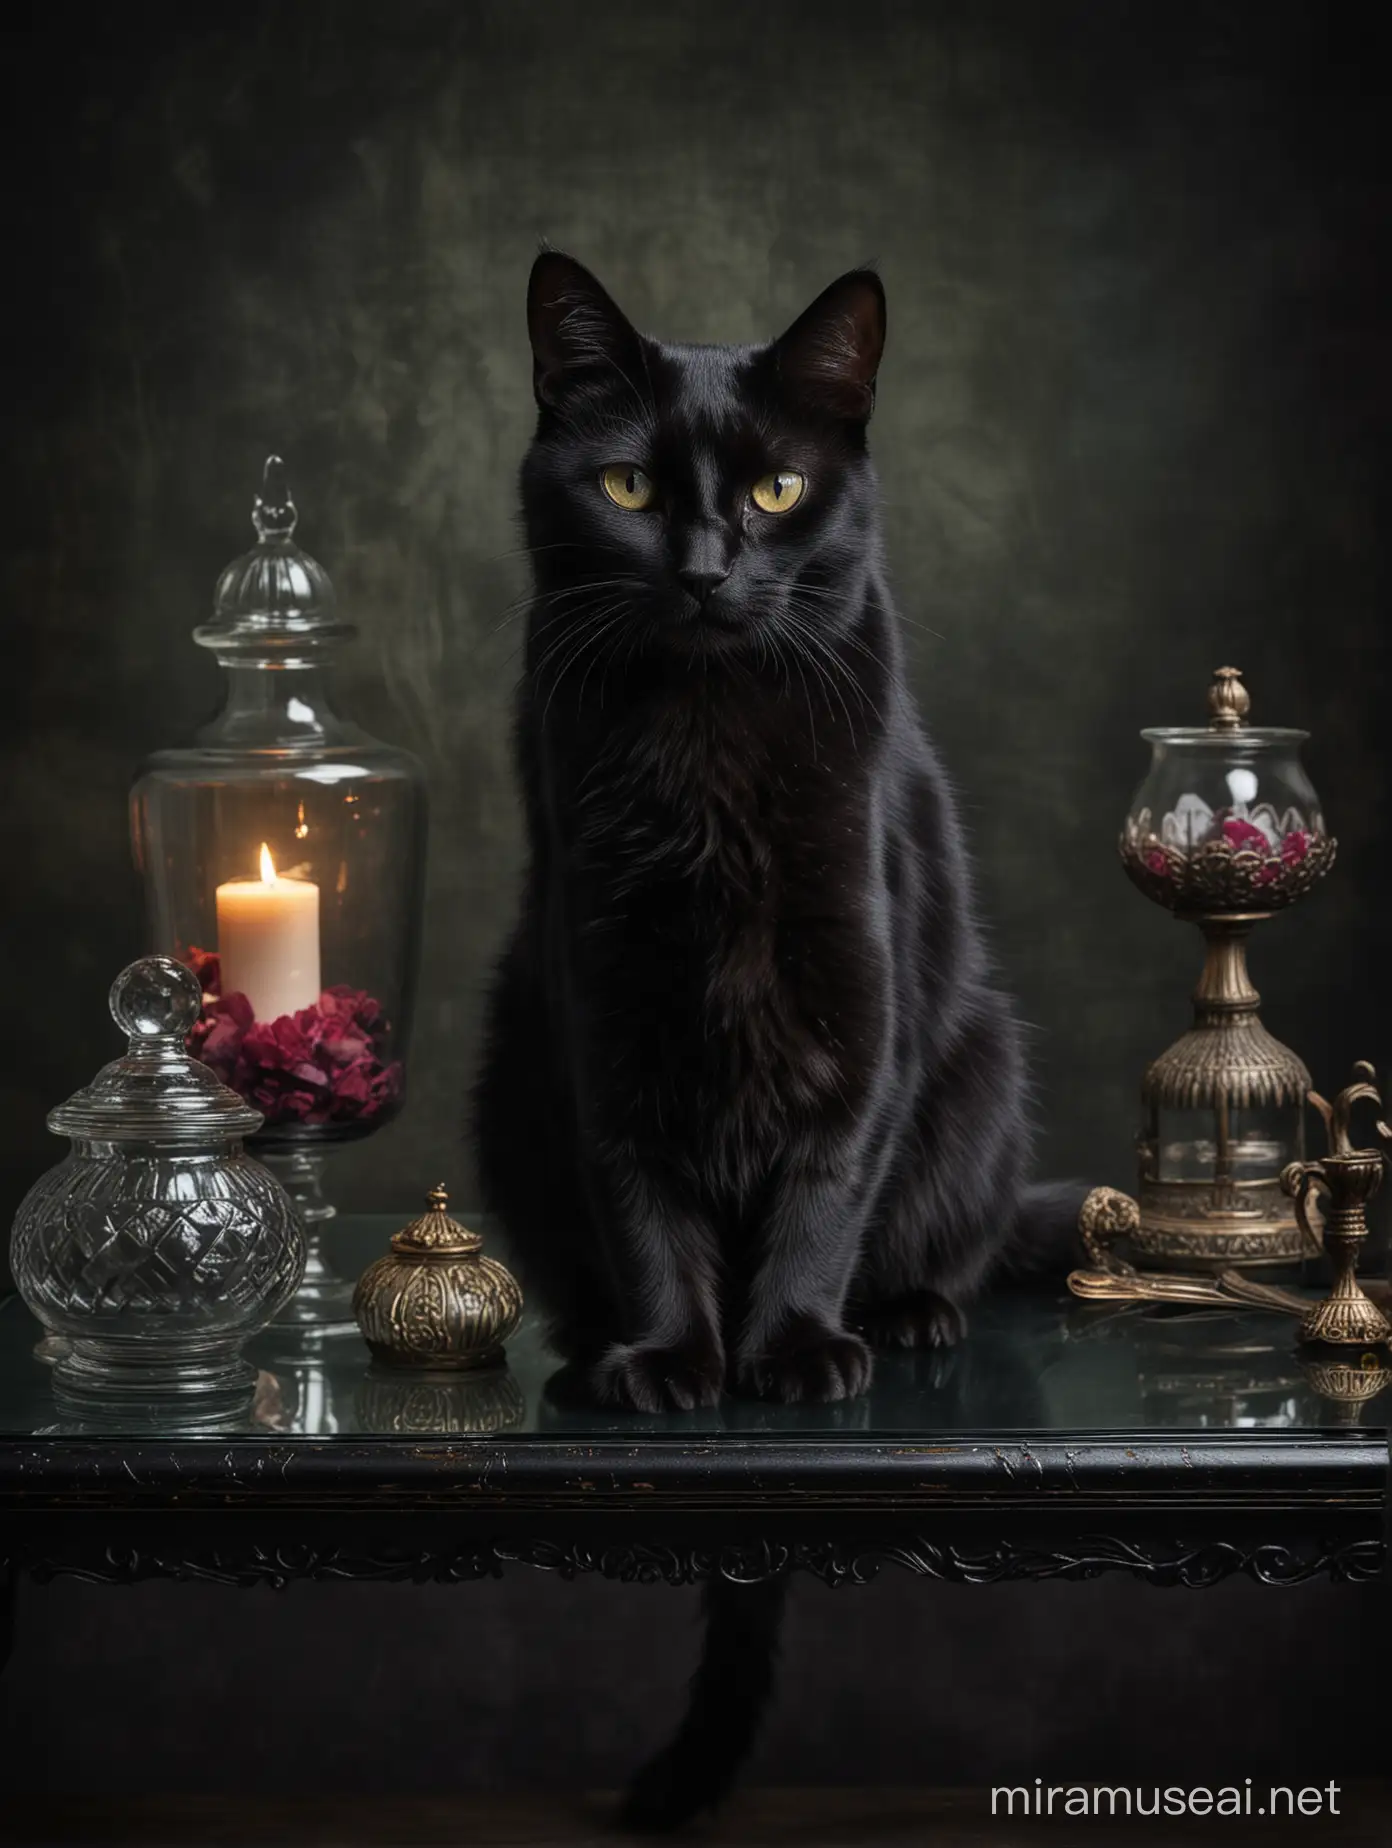 Gothic Alice in Wonderland Inspired Studio Portrait Black Cat on Glass Table